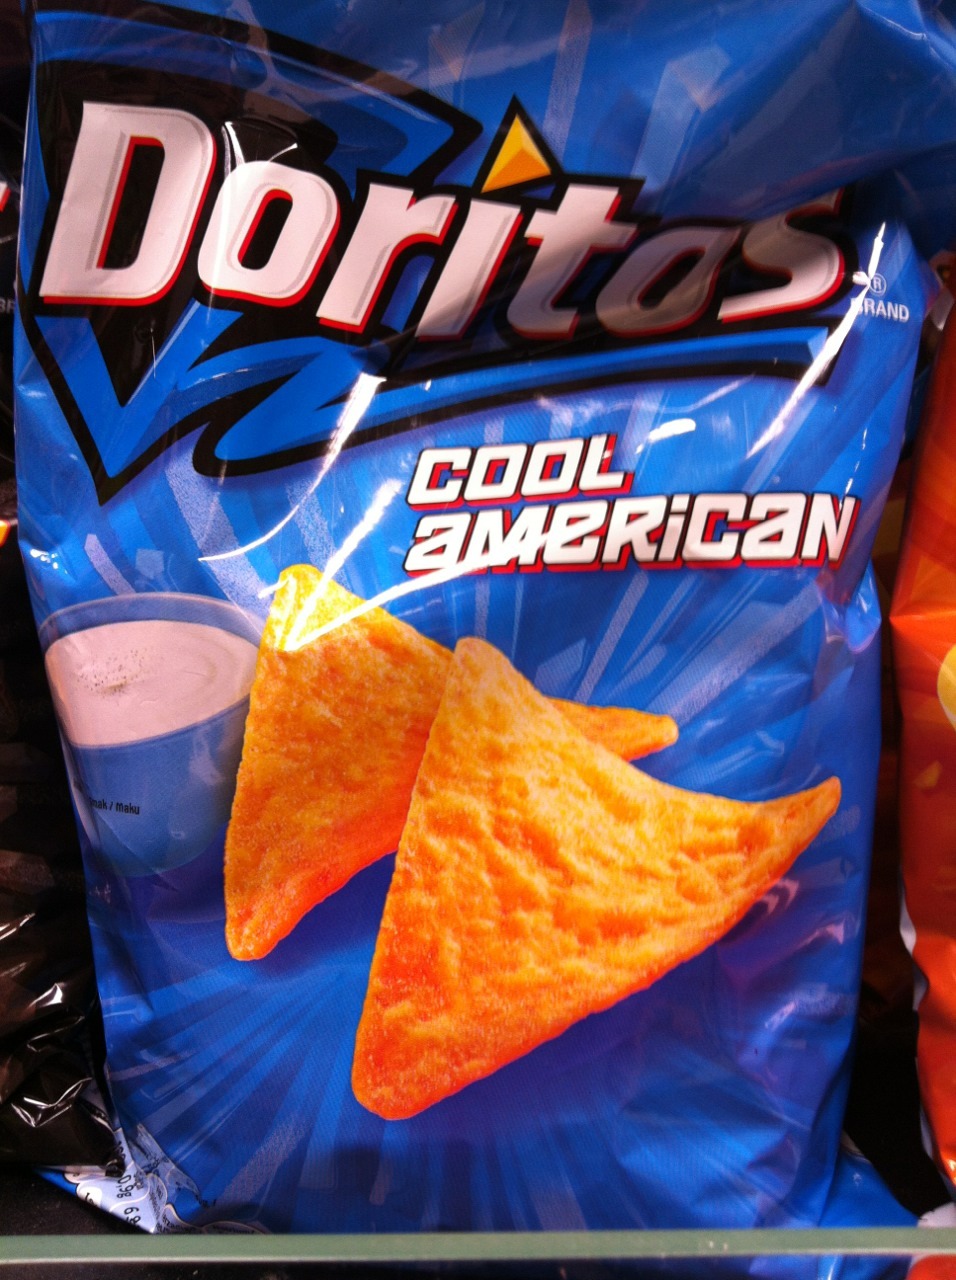 Everybody wanted to know. Американ чипс. Чипсы с капитаном. Doritos Mountain Dew. Чипсы на американском английском.